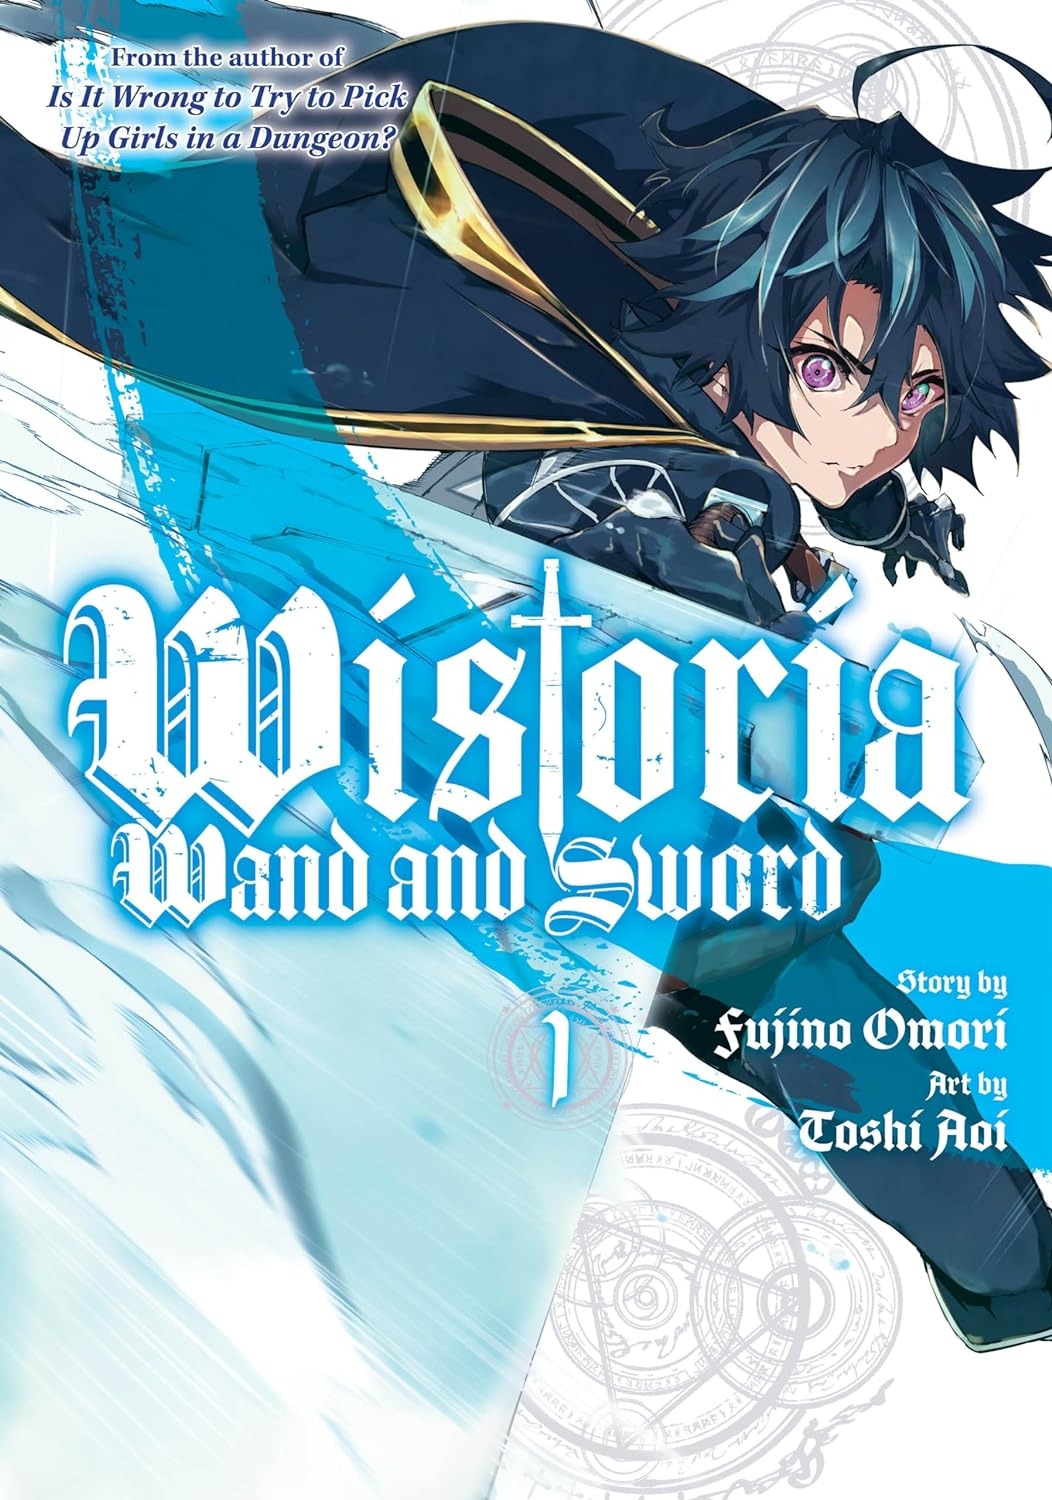 Wistoria Wand & Sword Manga Volume 1